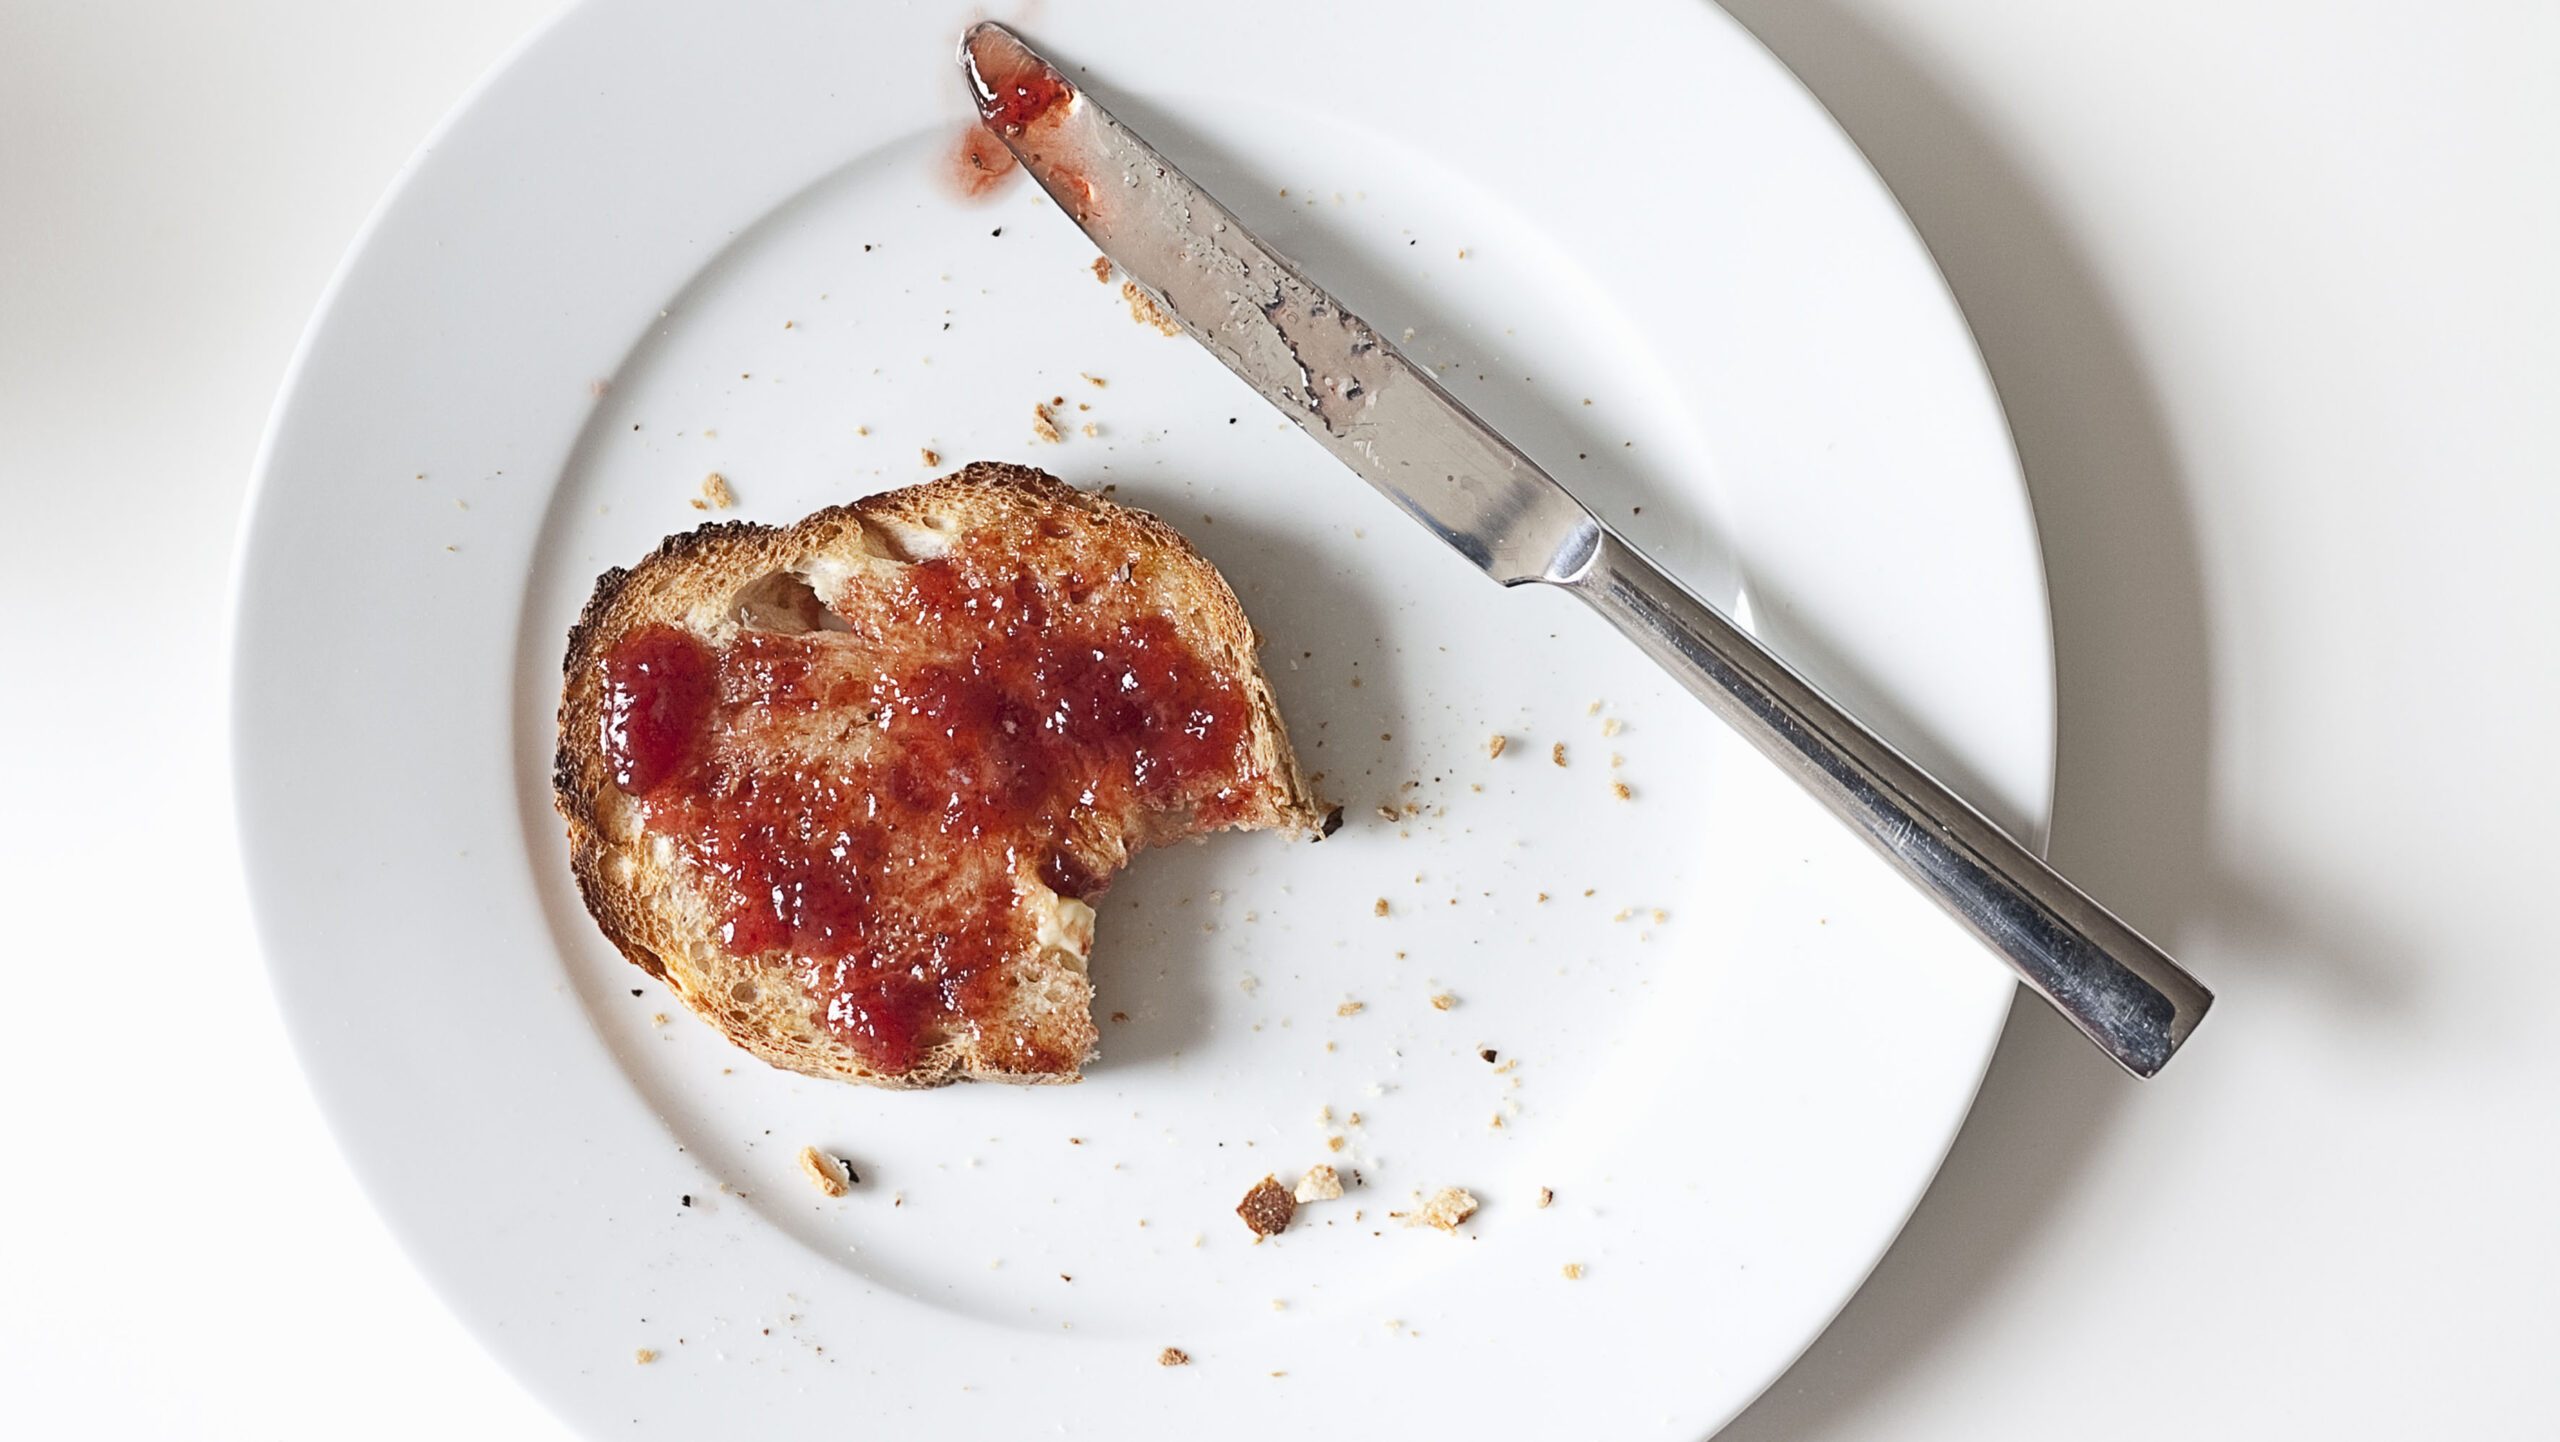 Skipping breakfast health myths, toast and jam